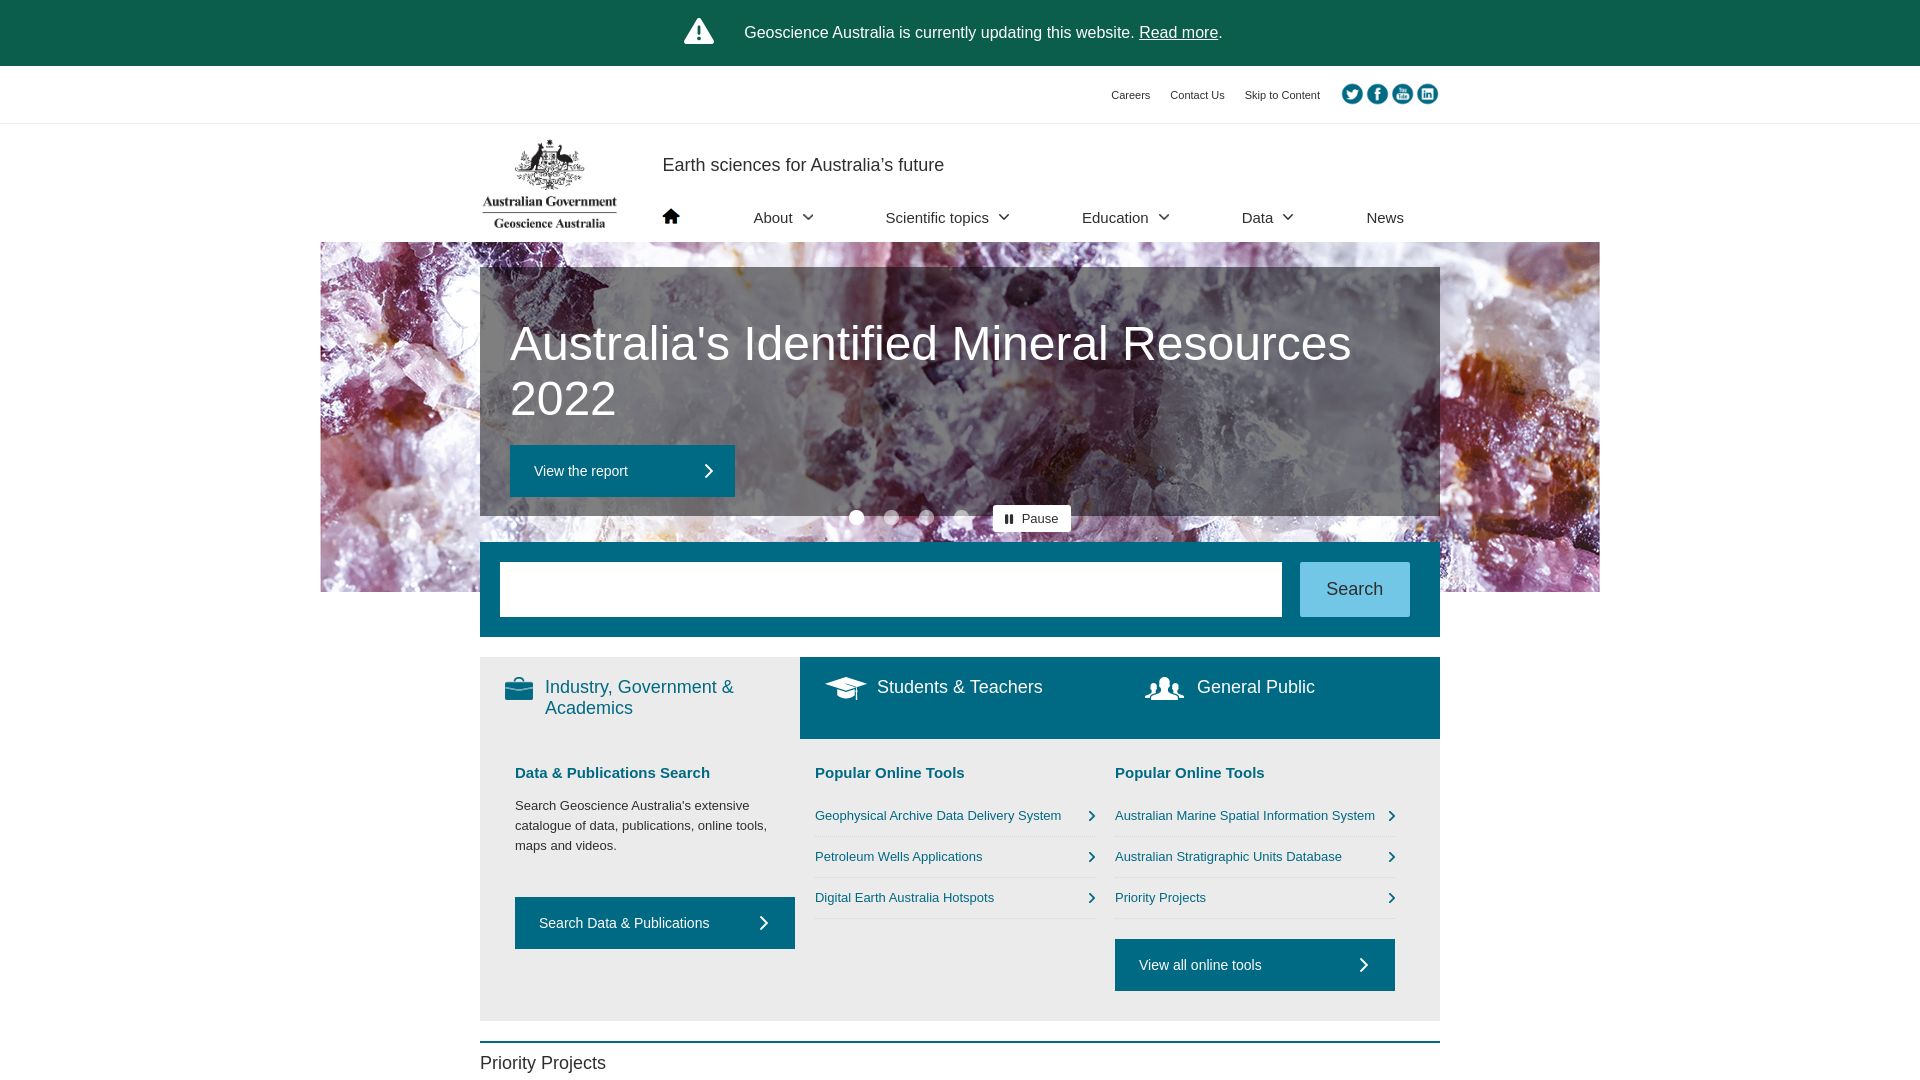 Website status ga.gov.au is   ONLINE